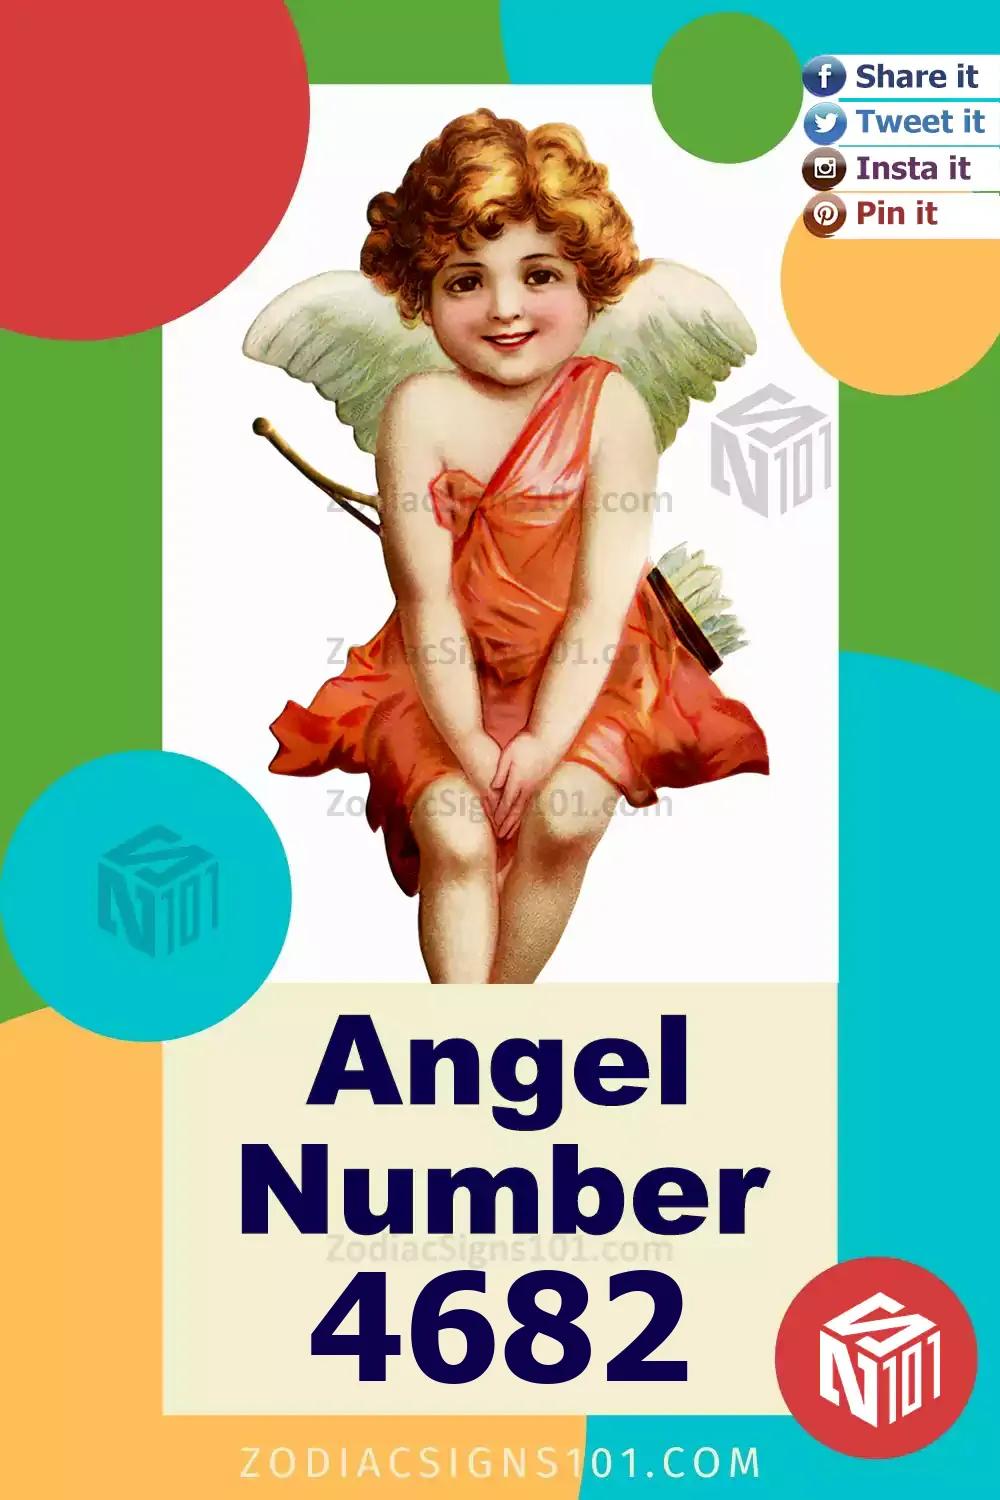 4682-Angel-Number-Meaning.jpg